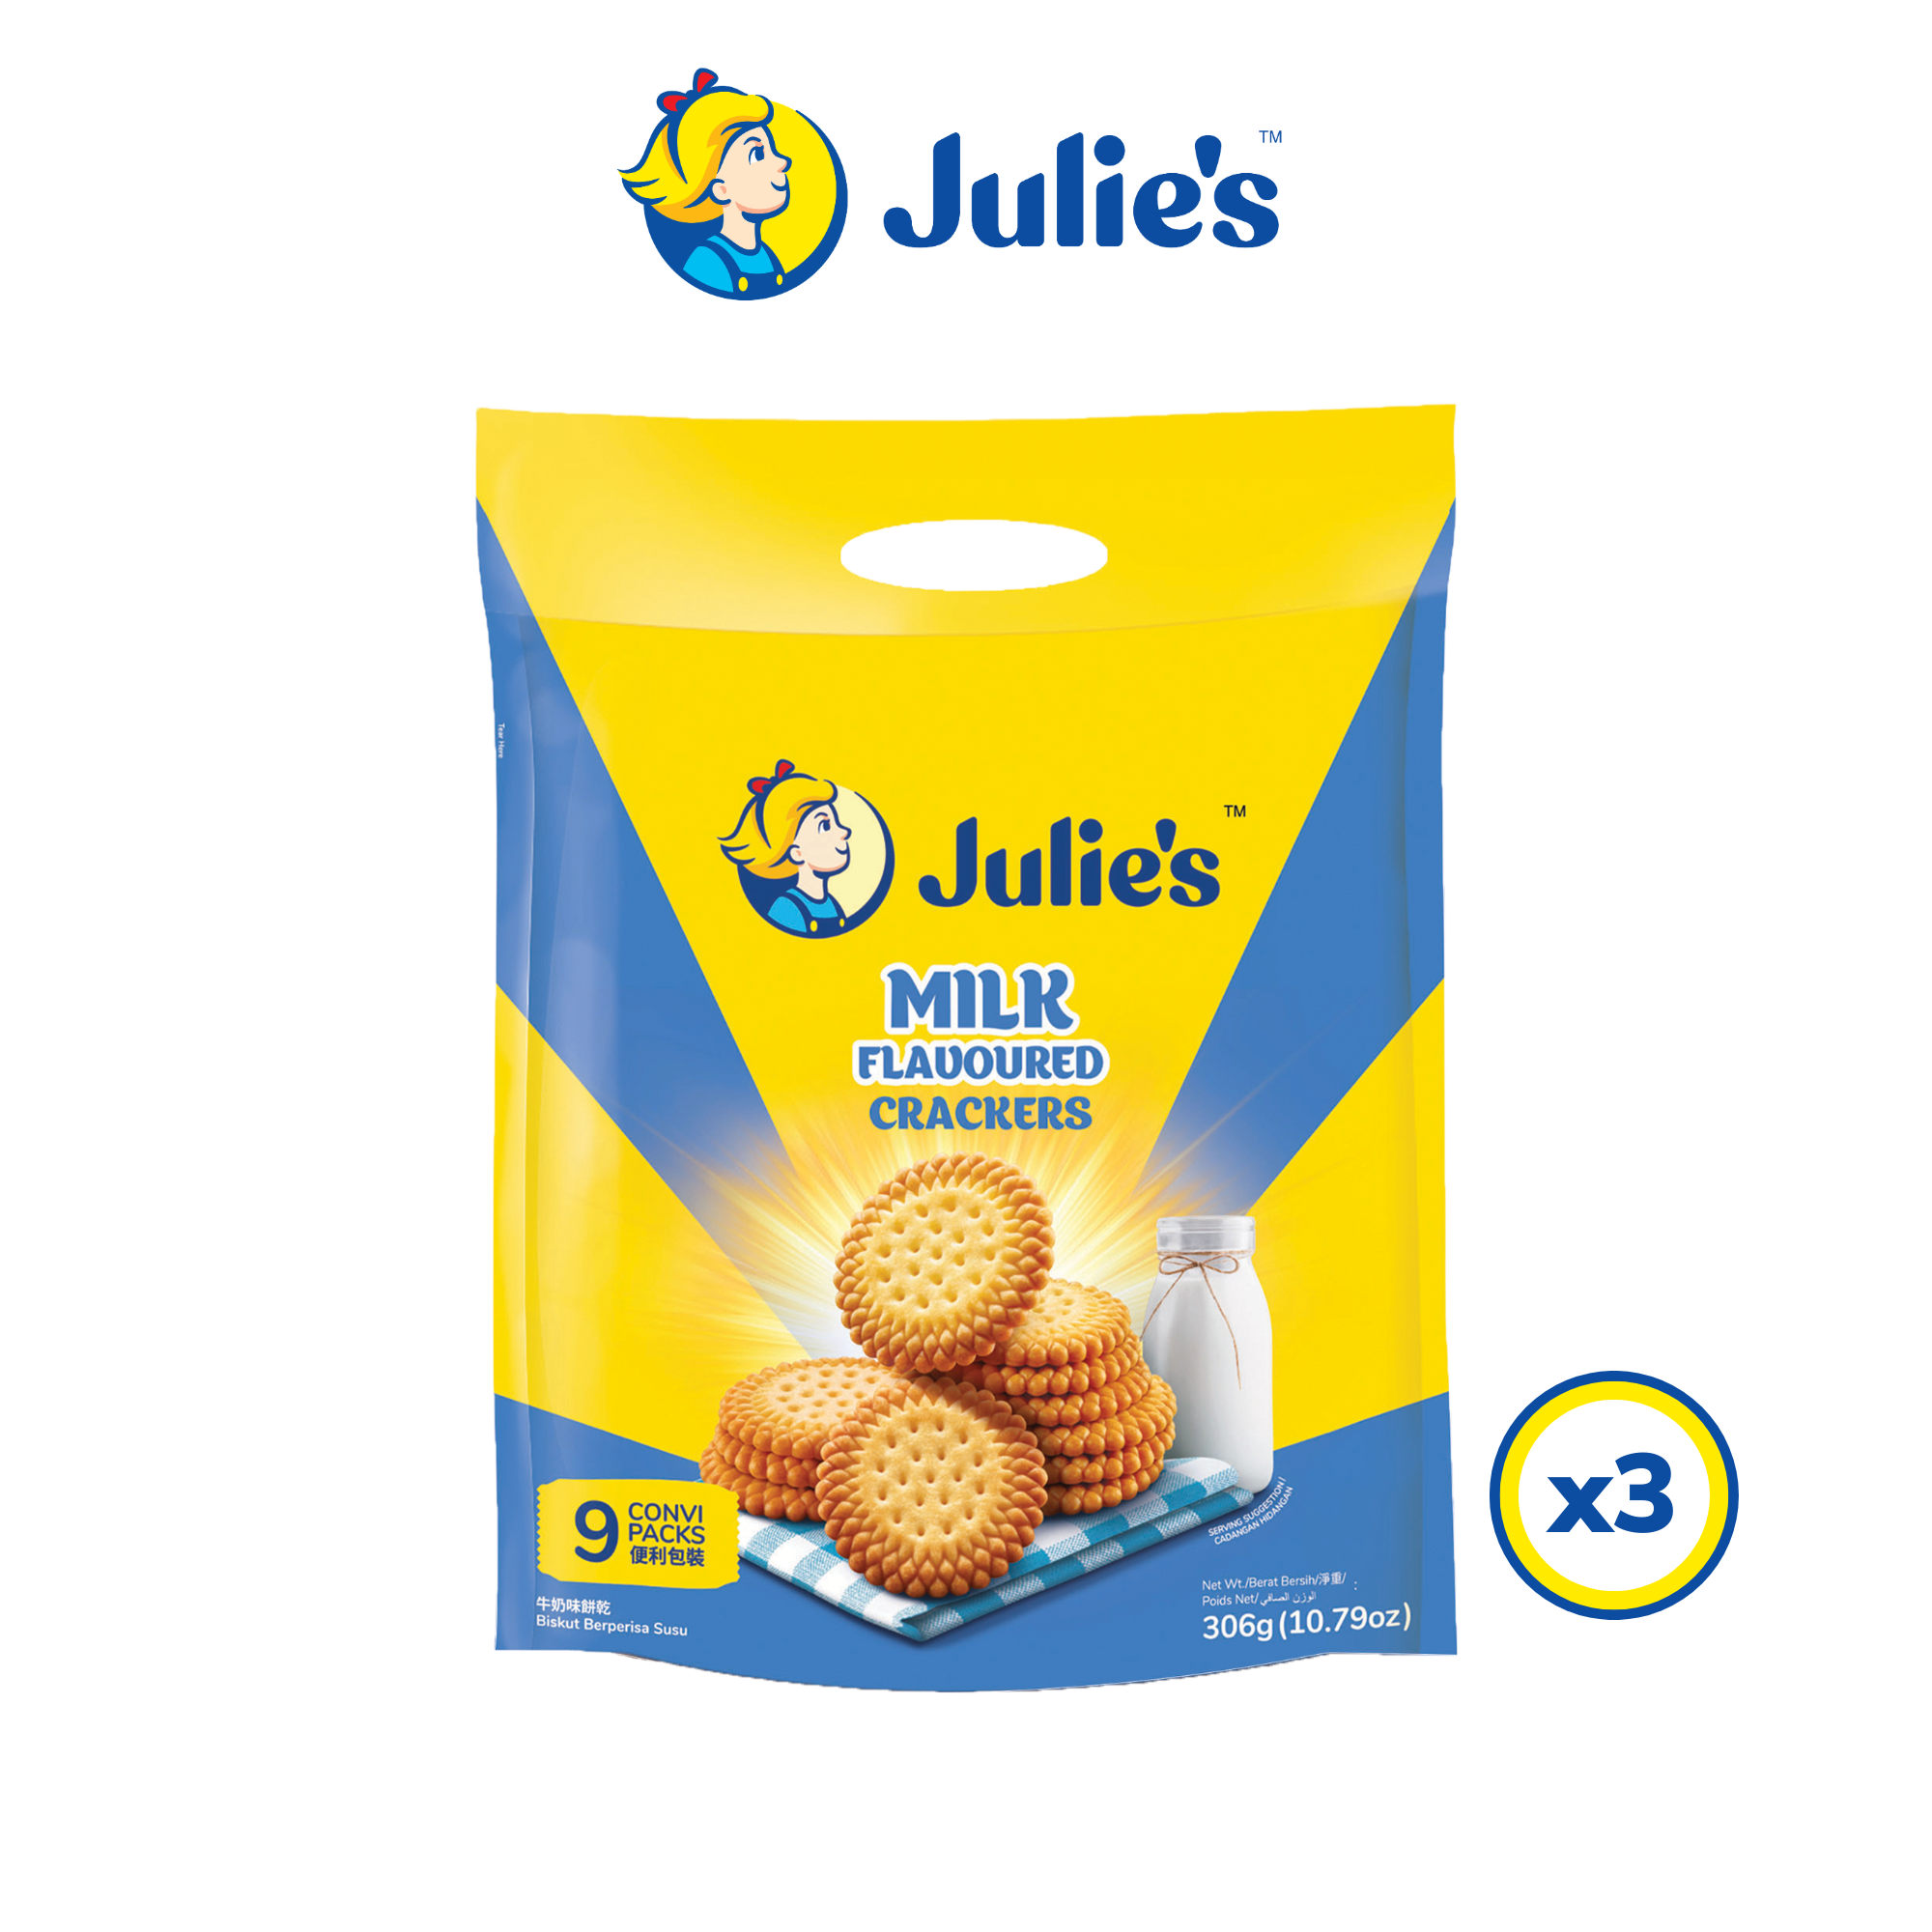 Julie's Milk Crackers 306g x 3 packs